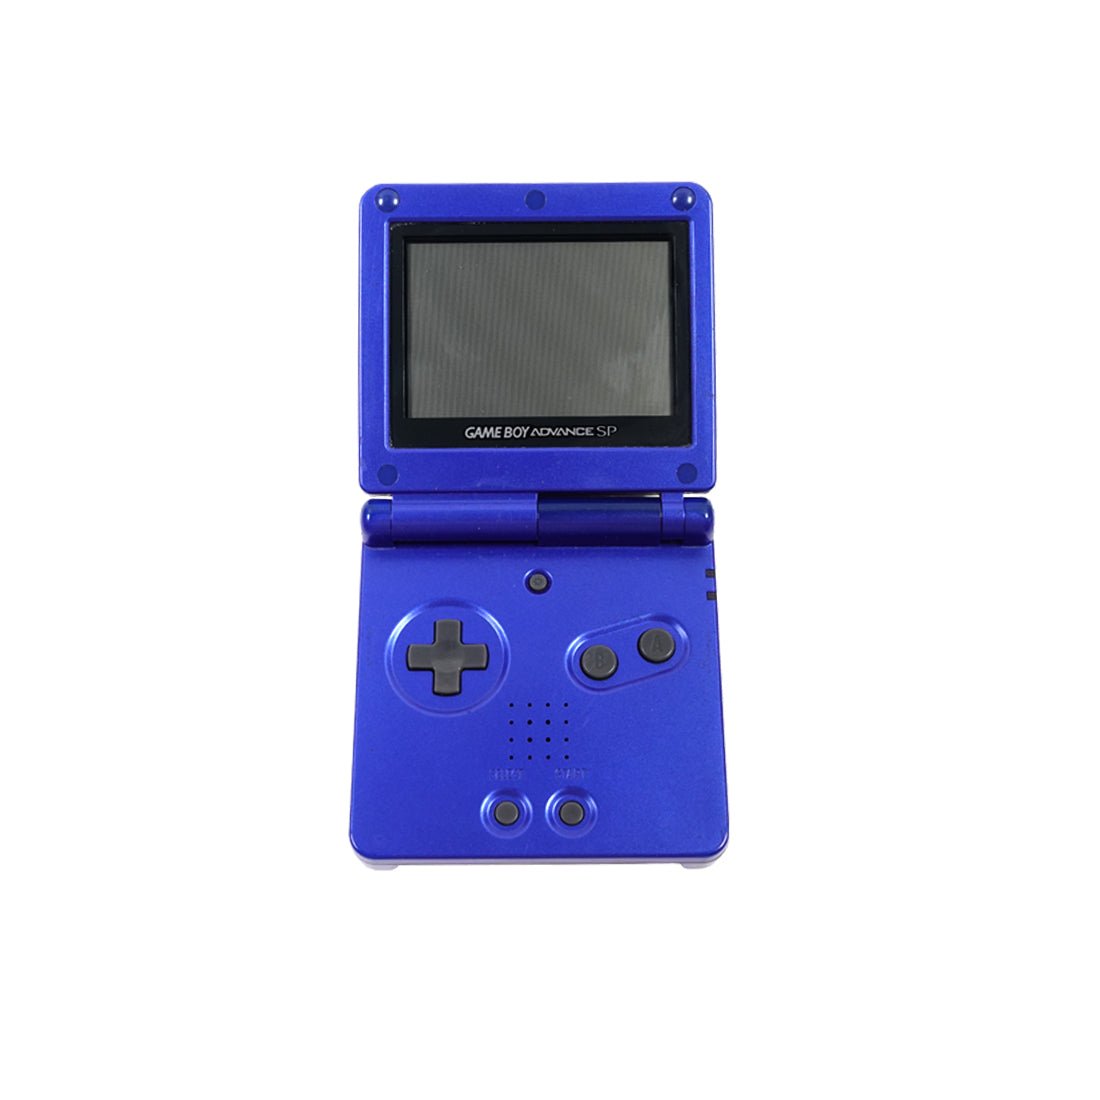 Pre-Owned) Nintendo Game Boy Advance SP Console - Blue - ريترو 